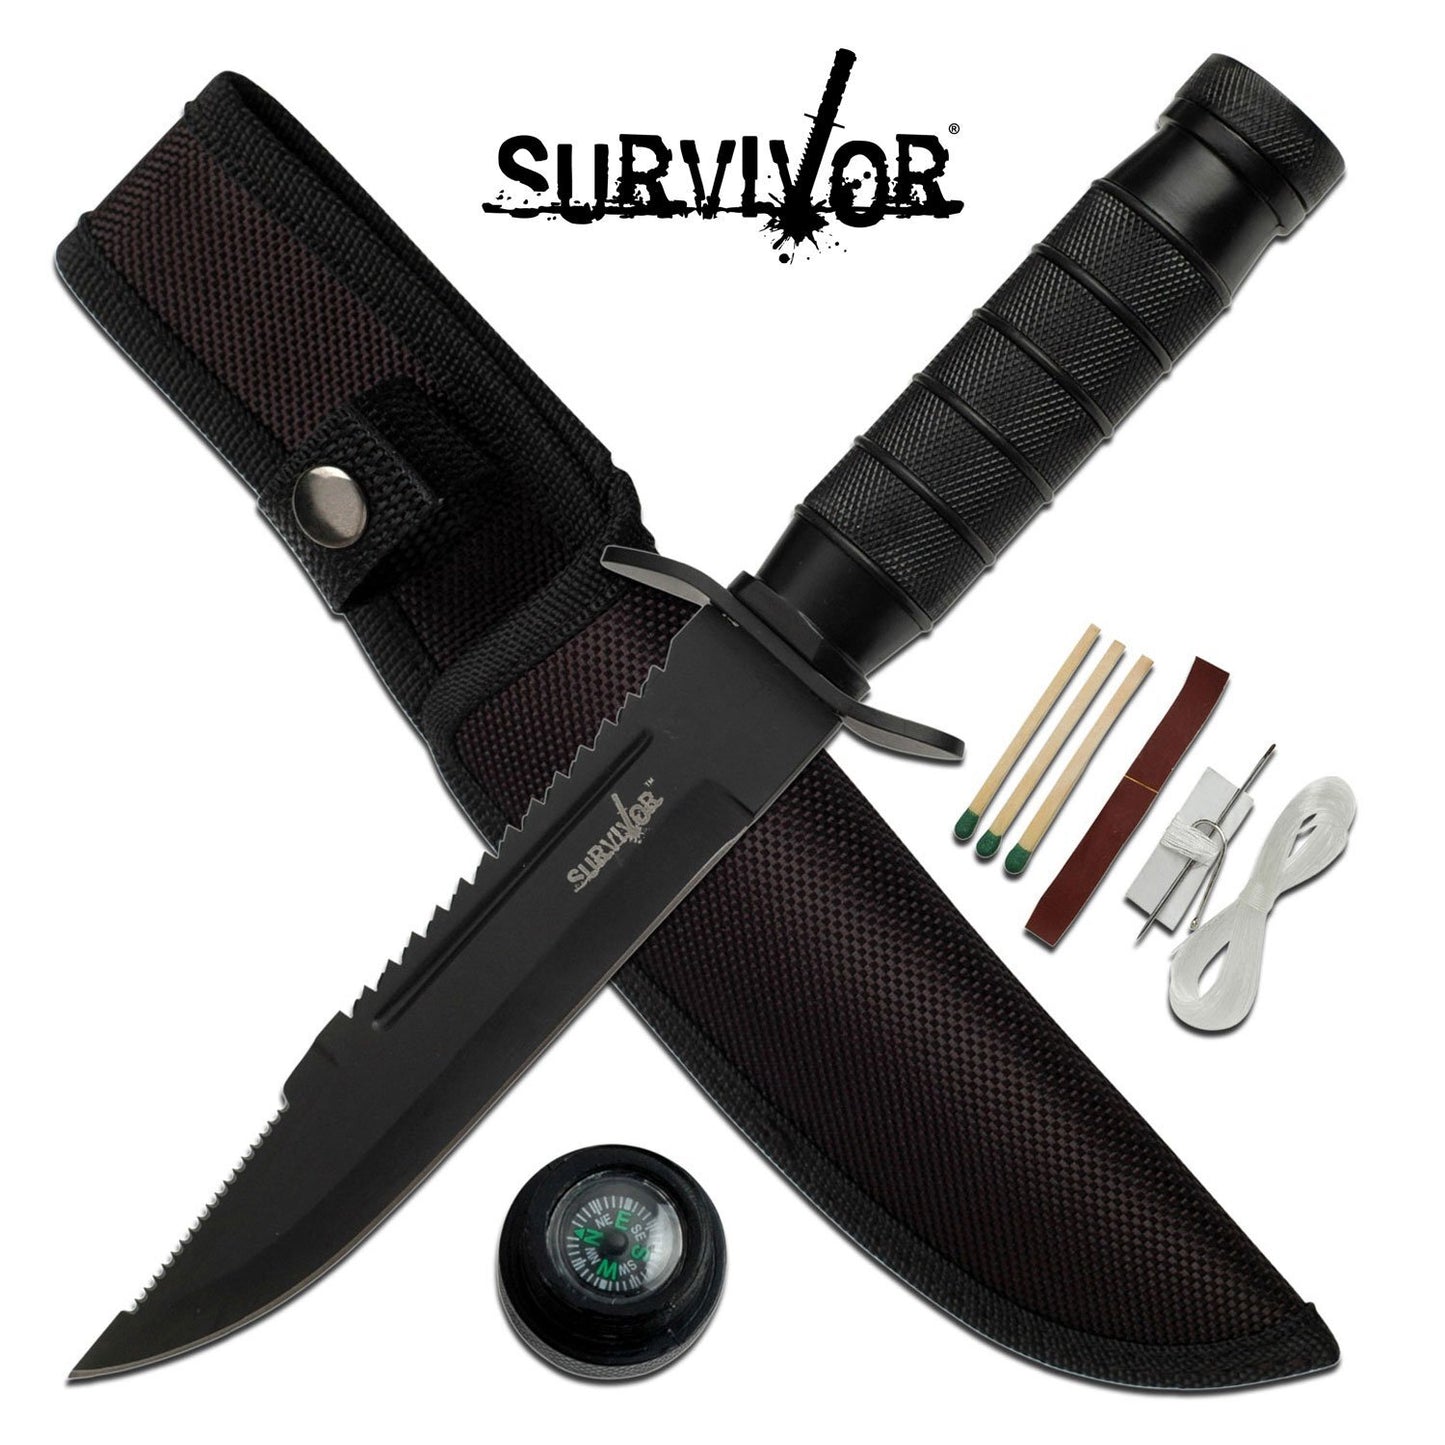 Survivor Survivor 9.5 Inch Fixed Blade Knife W Survival Kit - Black #hk-695B Black